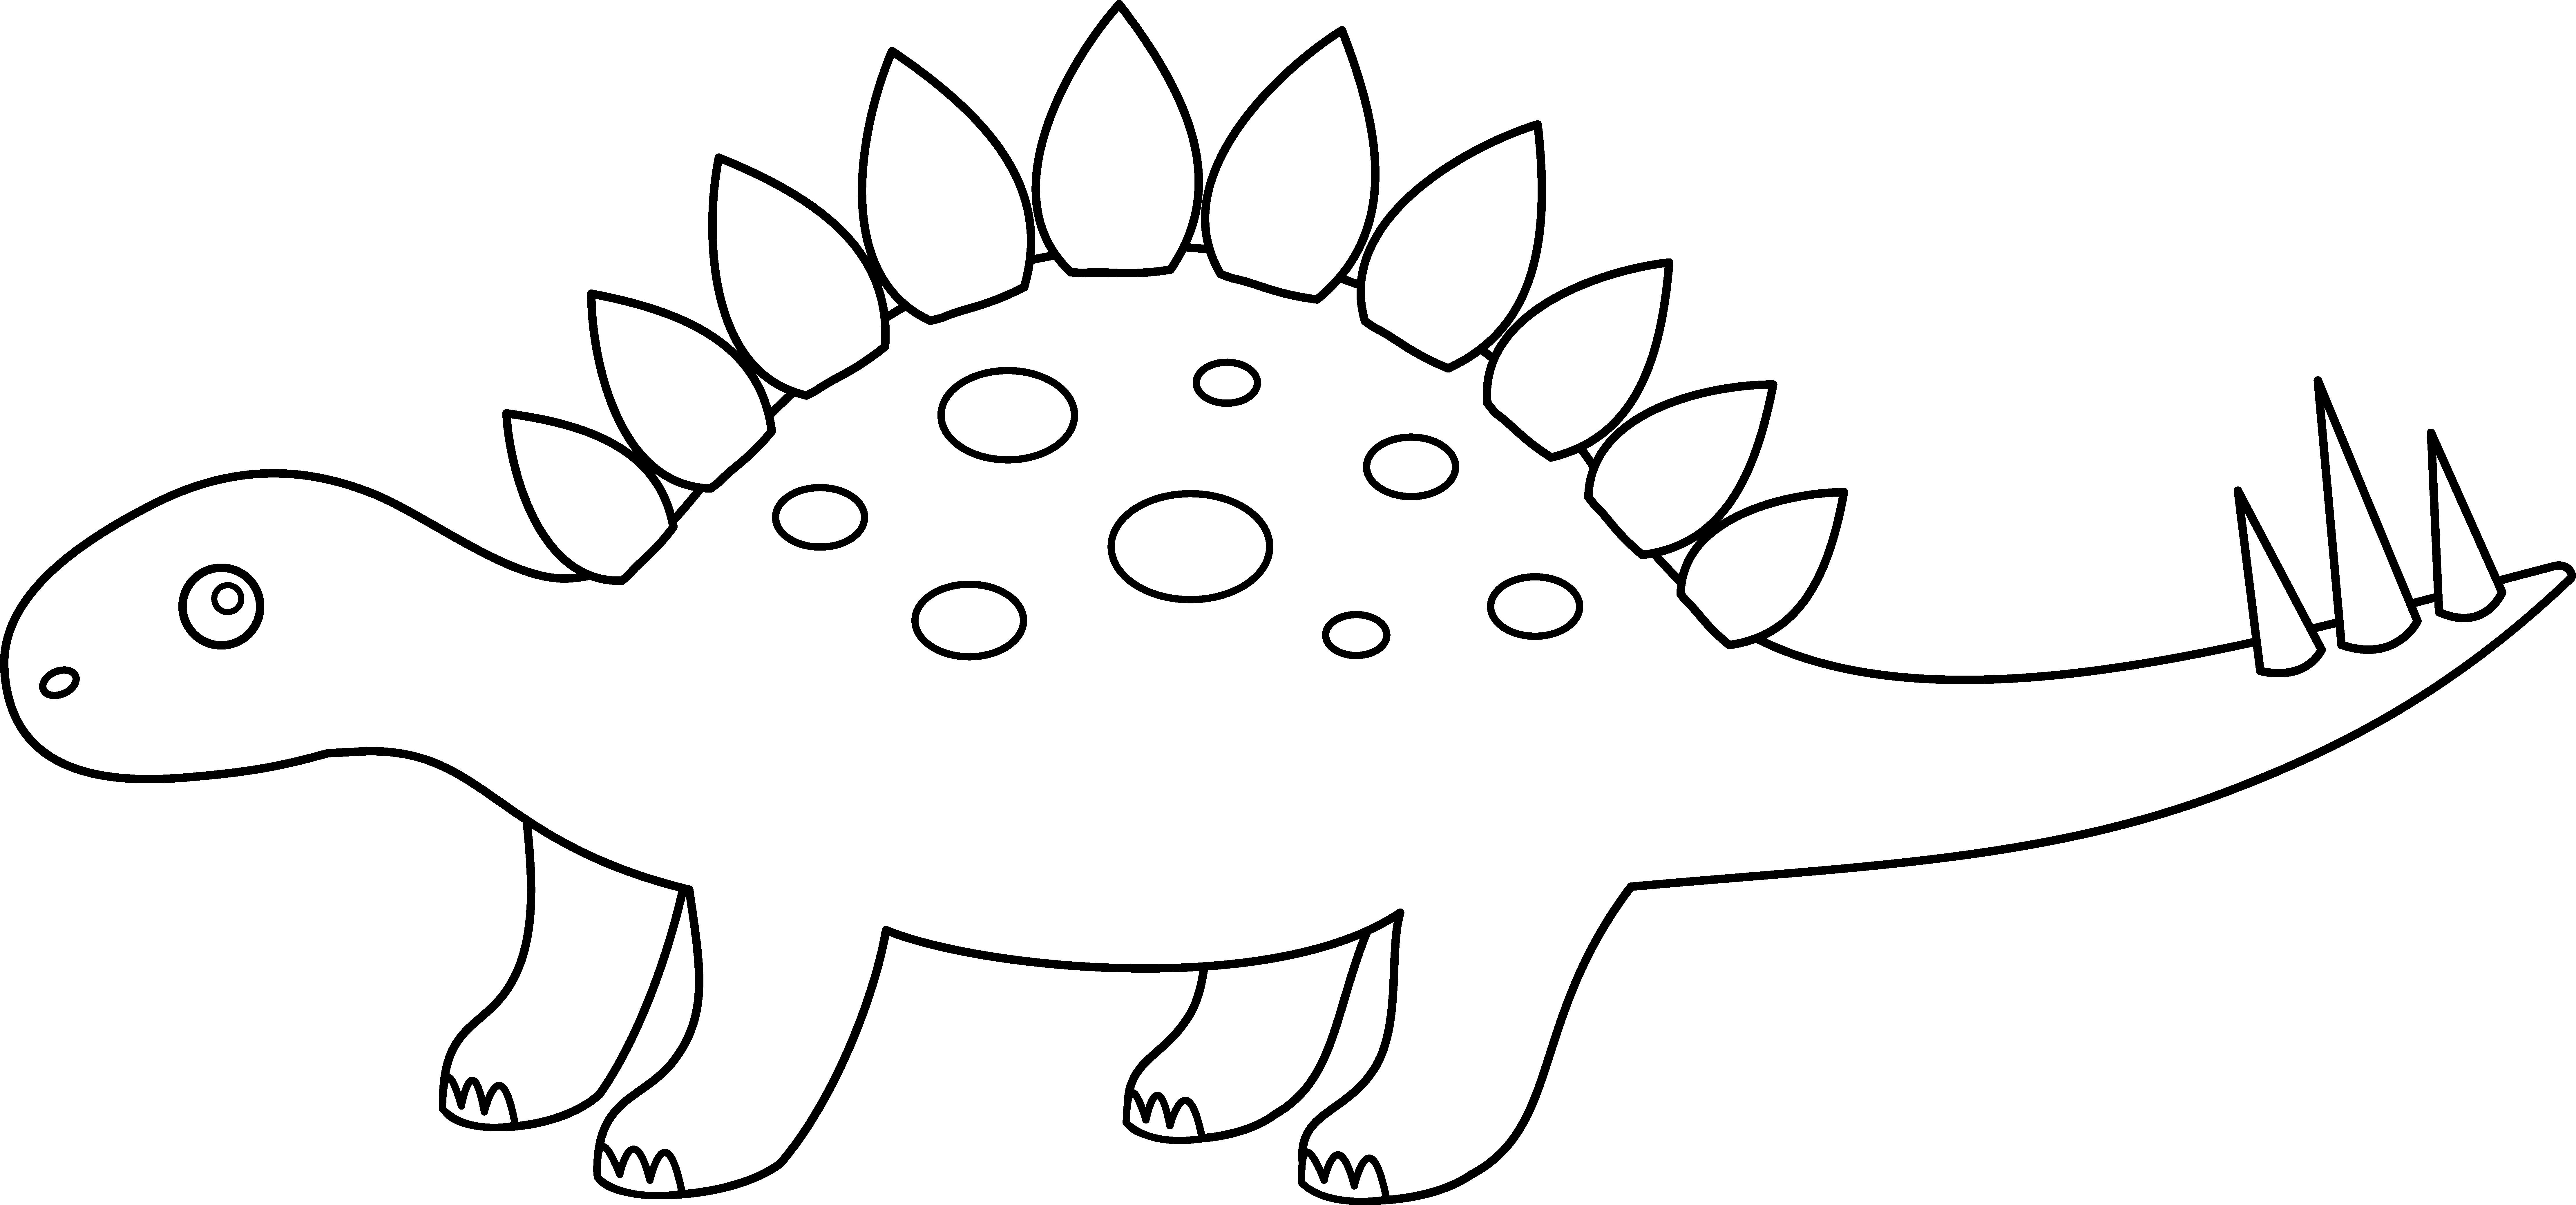 stegosaurus-outline-cliparts-co